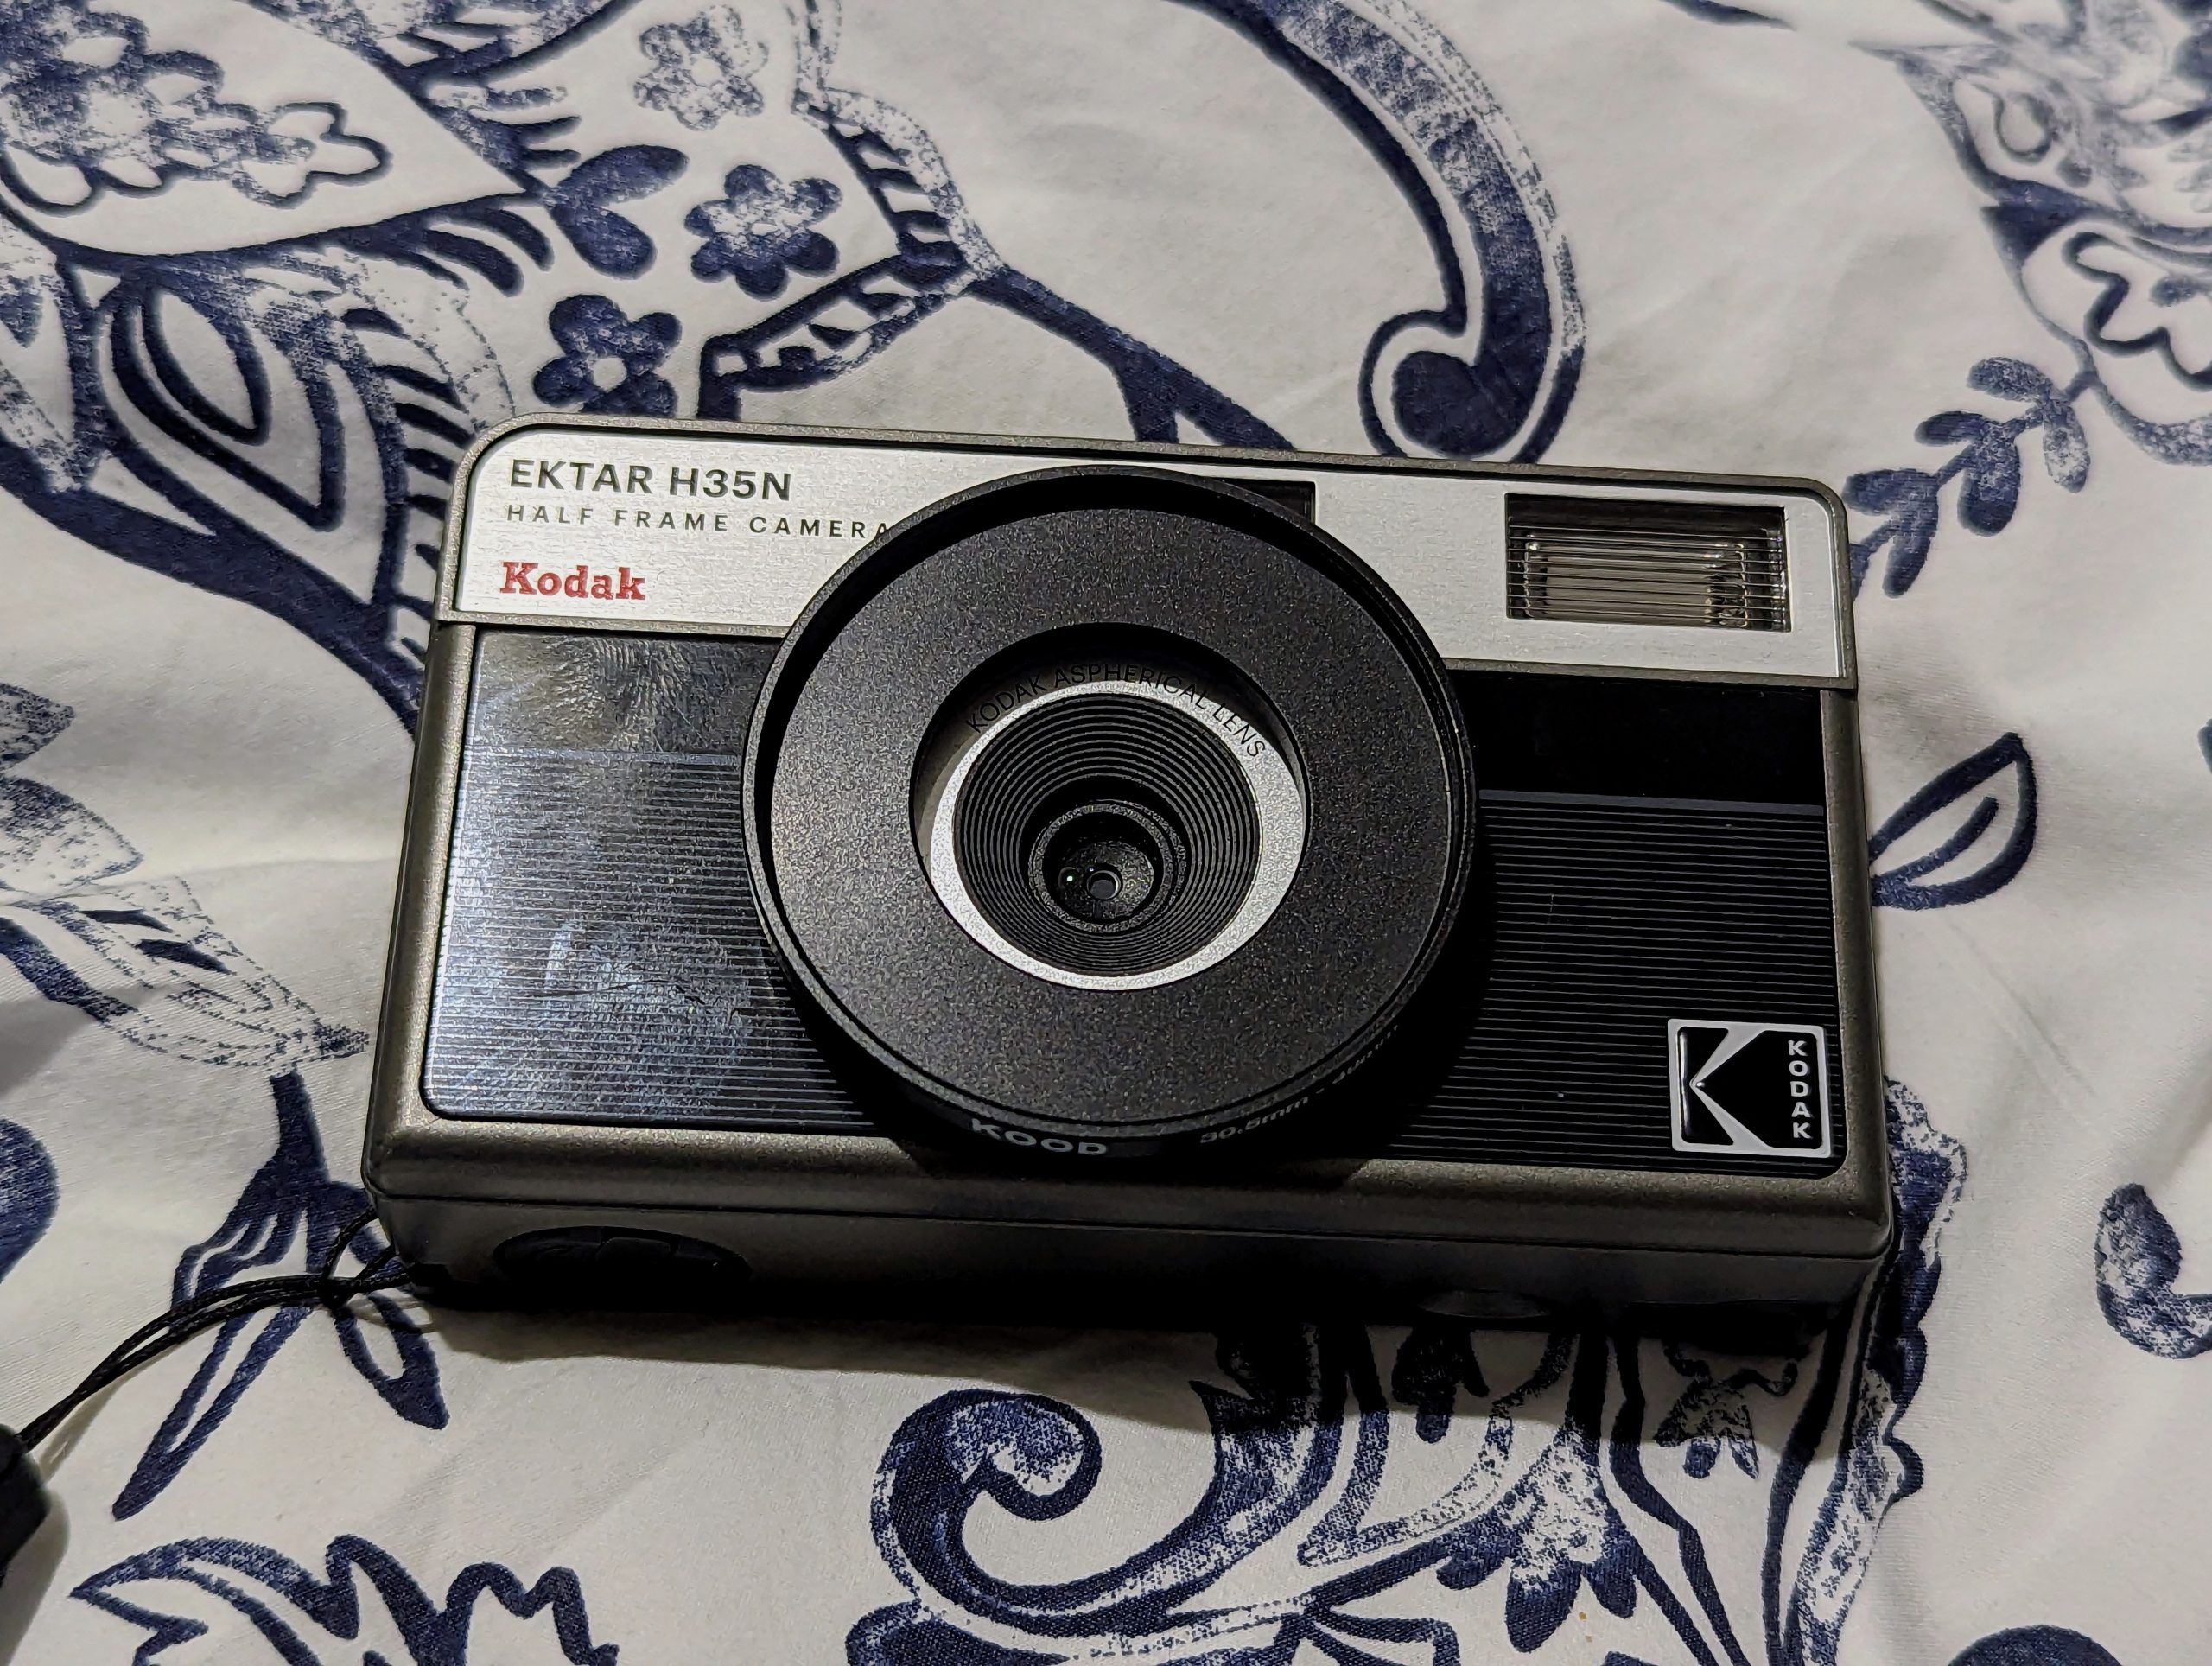 Kood 30.5mm to 49mm stepping ring on the Kodak Ektar H35N